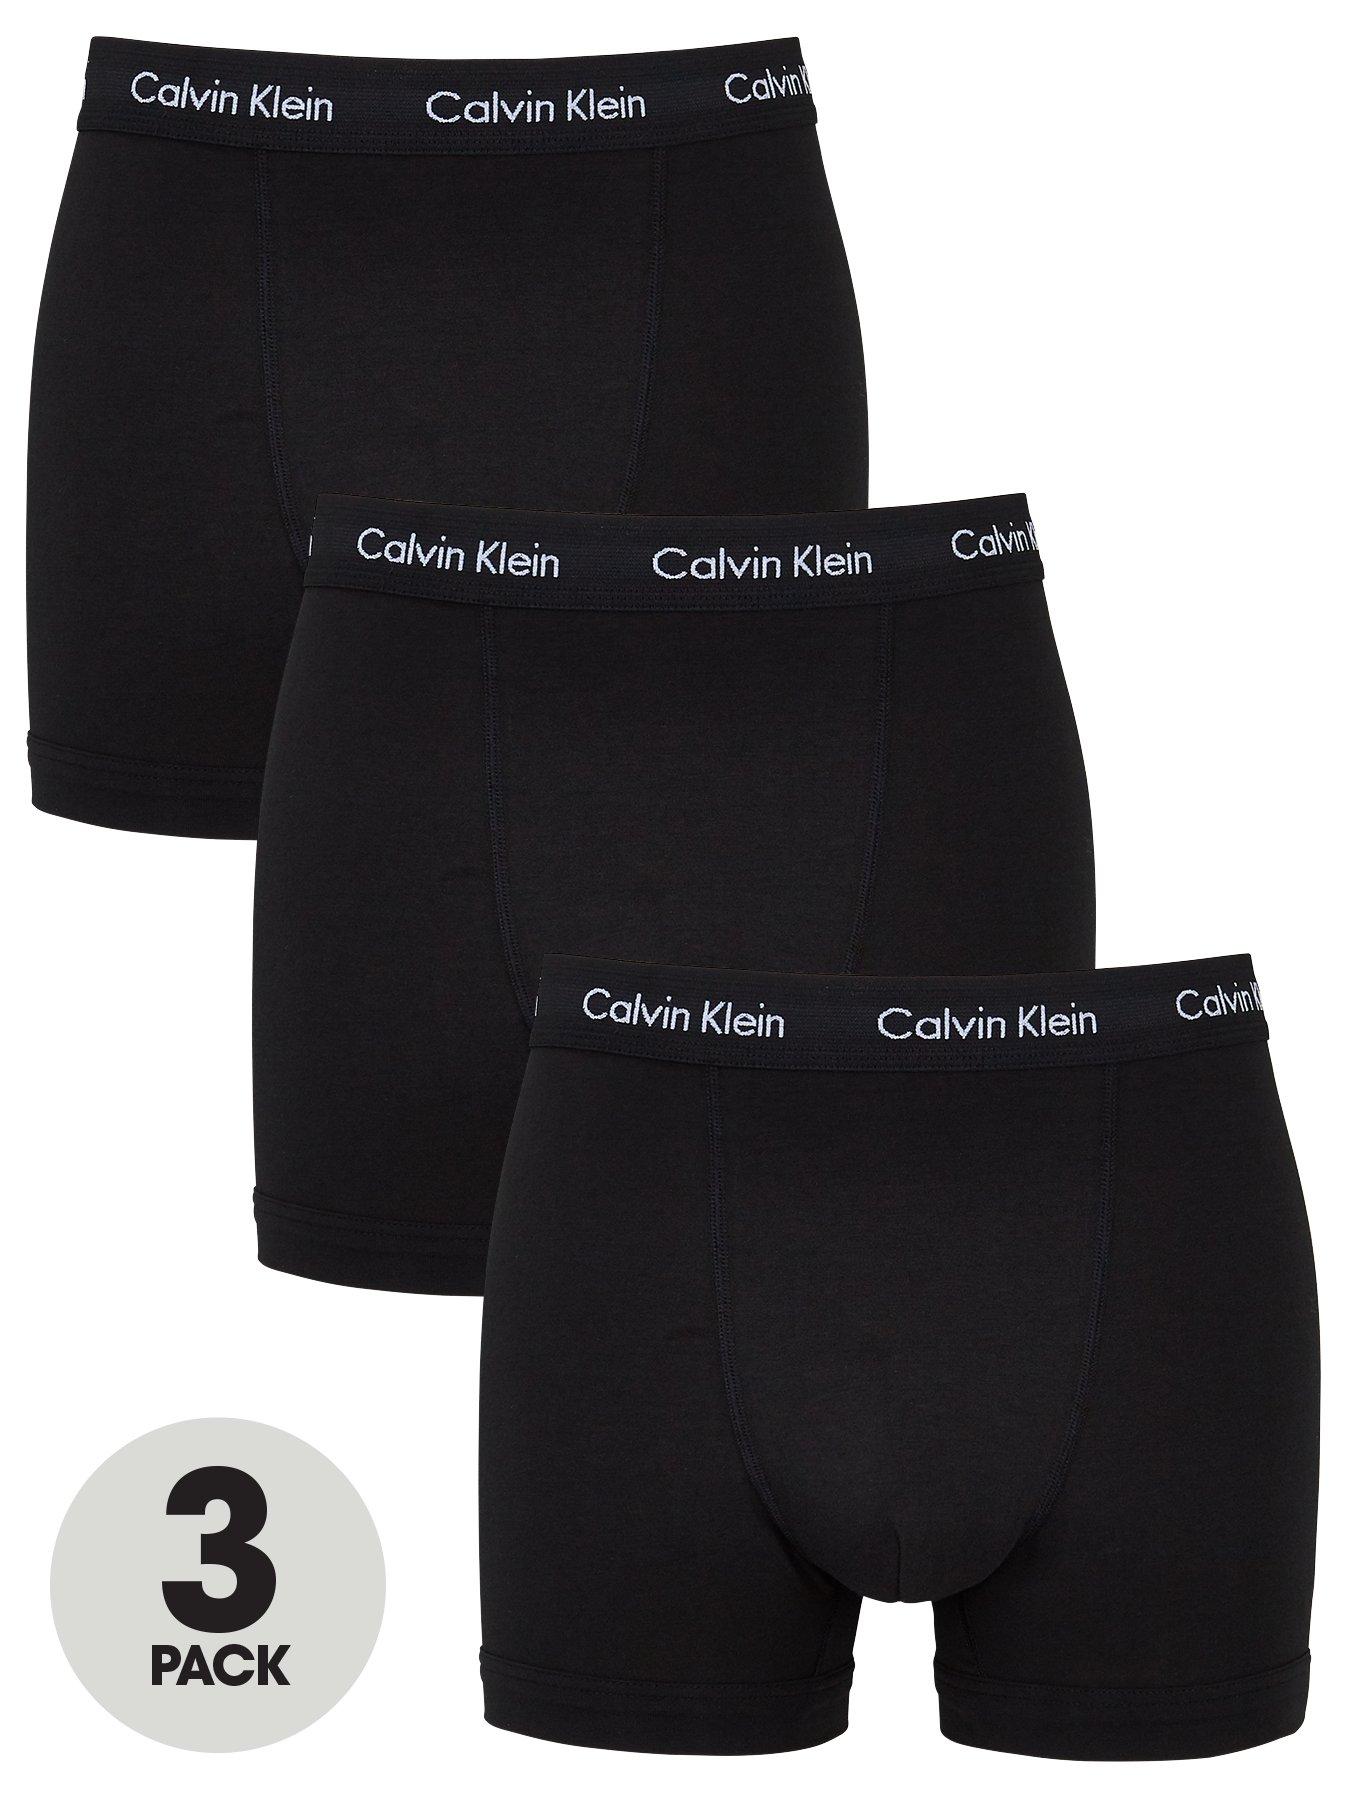 Shop Calvin Klein's Cutout Bralette in Black, Calvin Klein Black Core  Textured